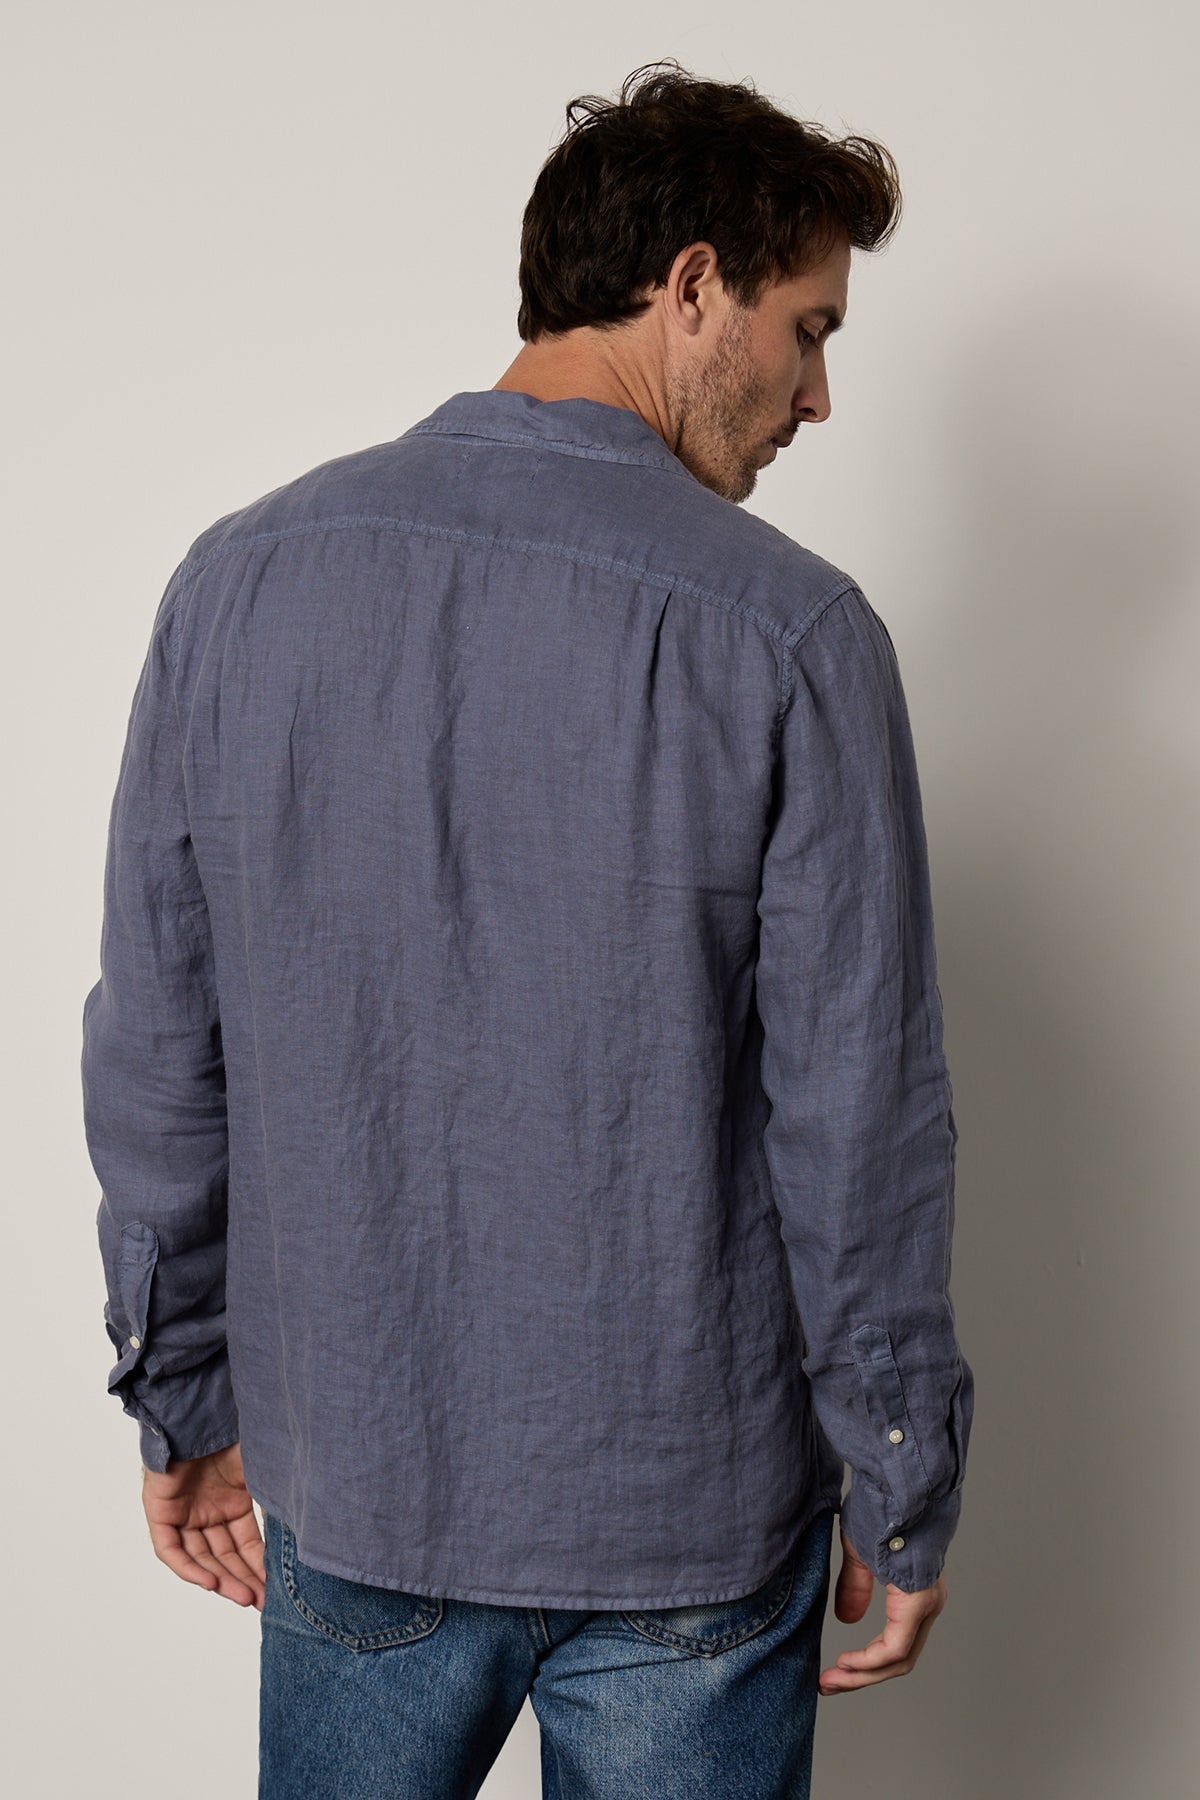 Benton Button-Up Shirt in baltic blue linen with worn denim back-35955069321409